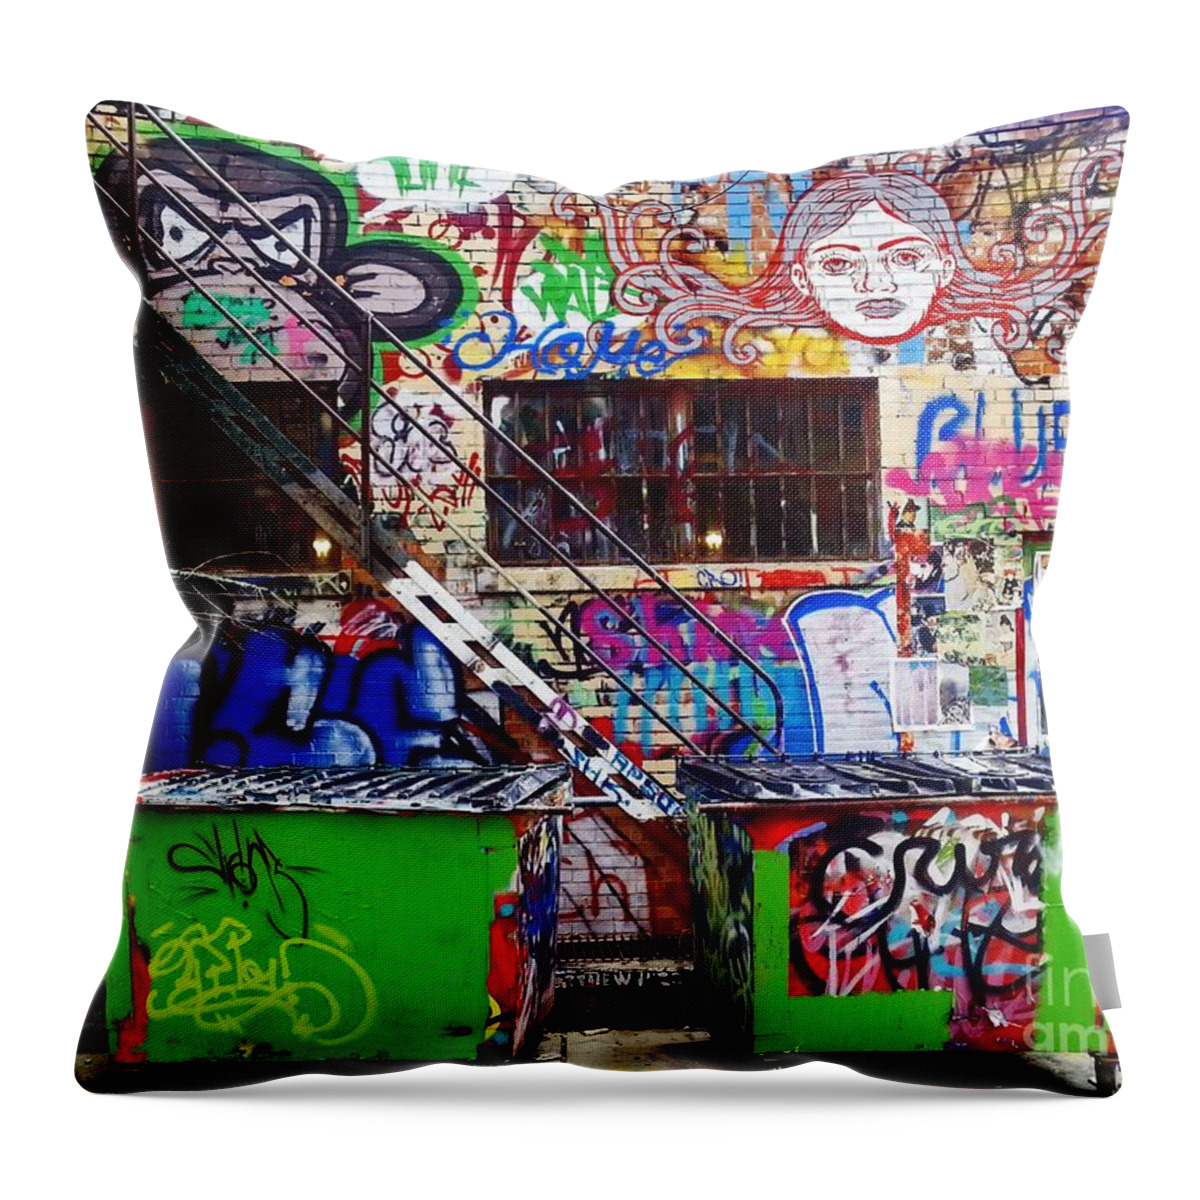 Graffiti Throw Pillow featuring the photograph American Graffiti by Joseph J Stevens